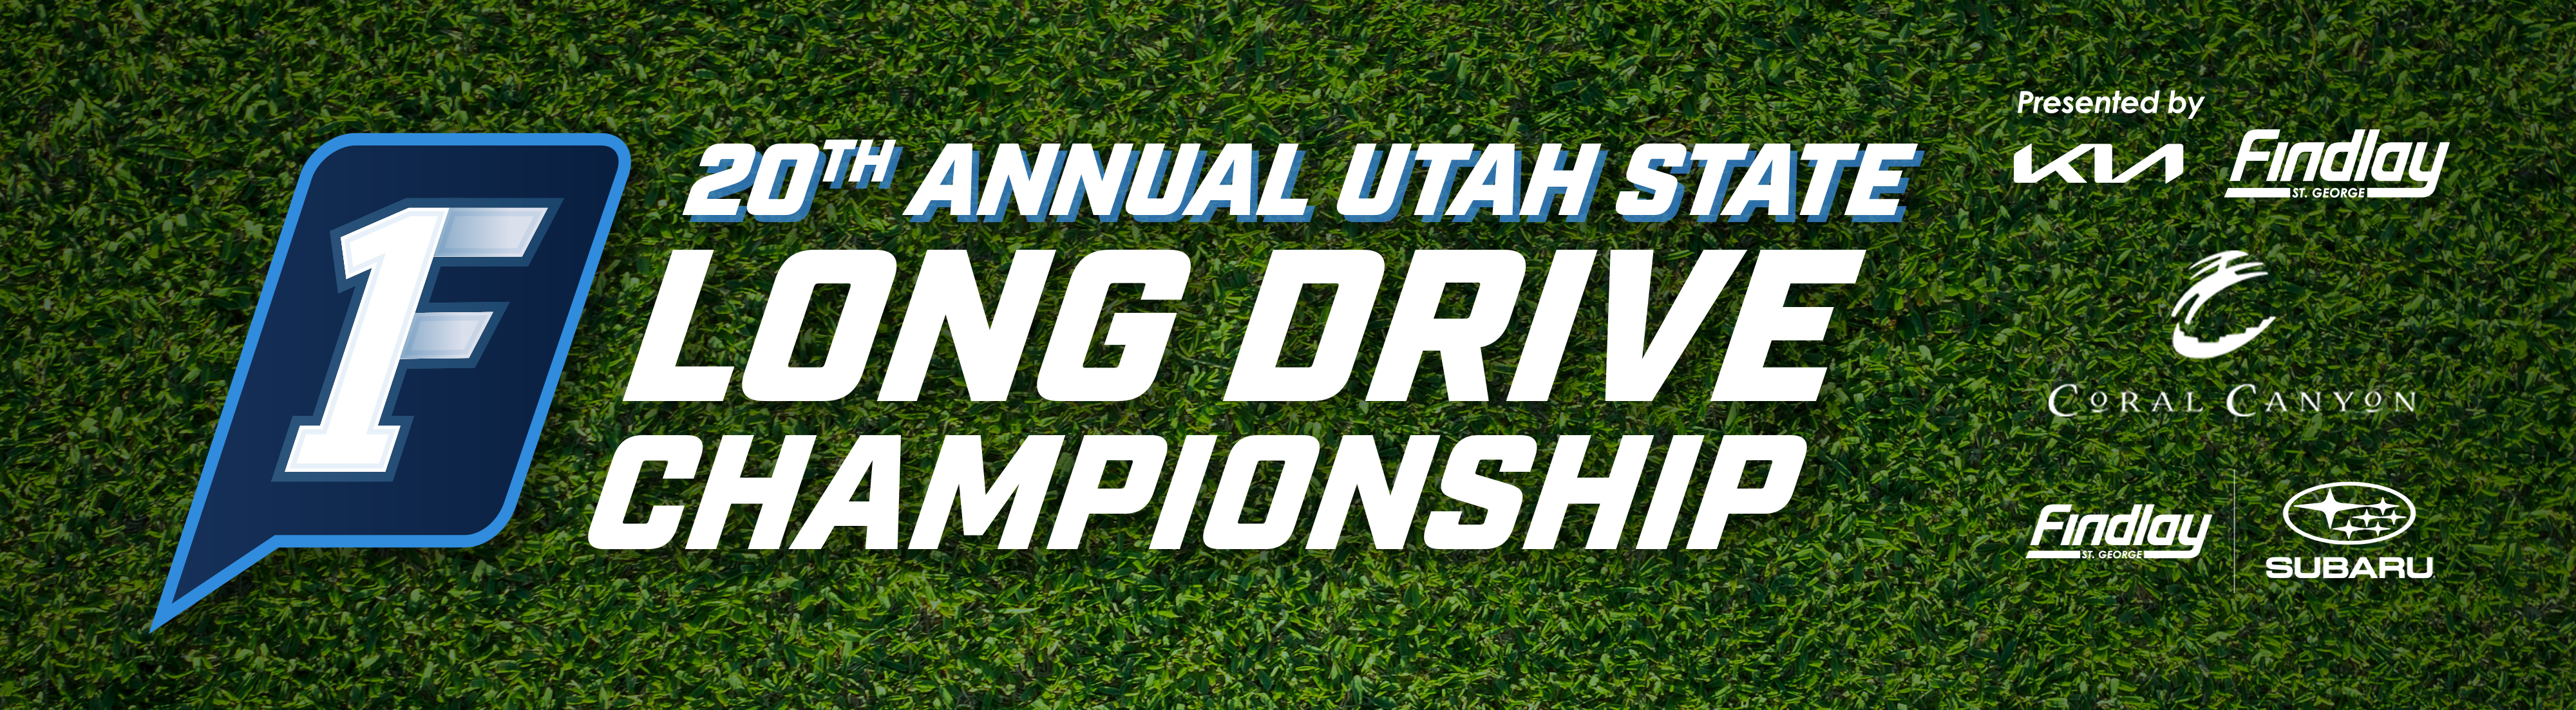 20th Annual Utah State Long Drive Championship